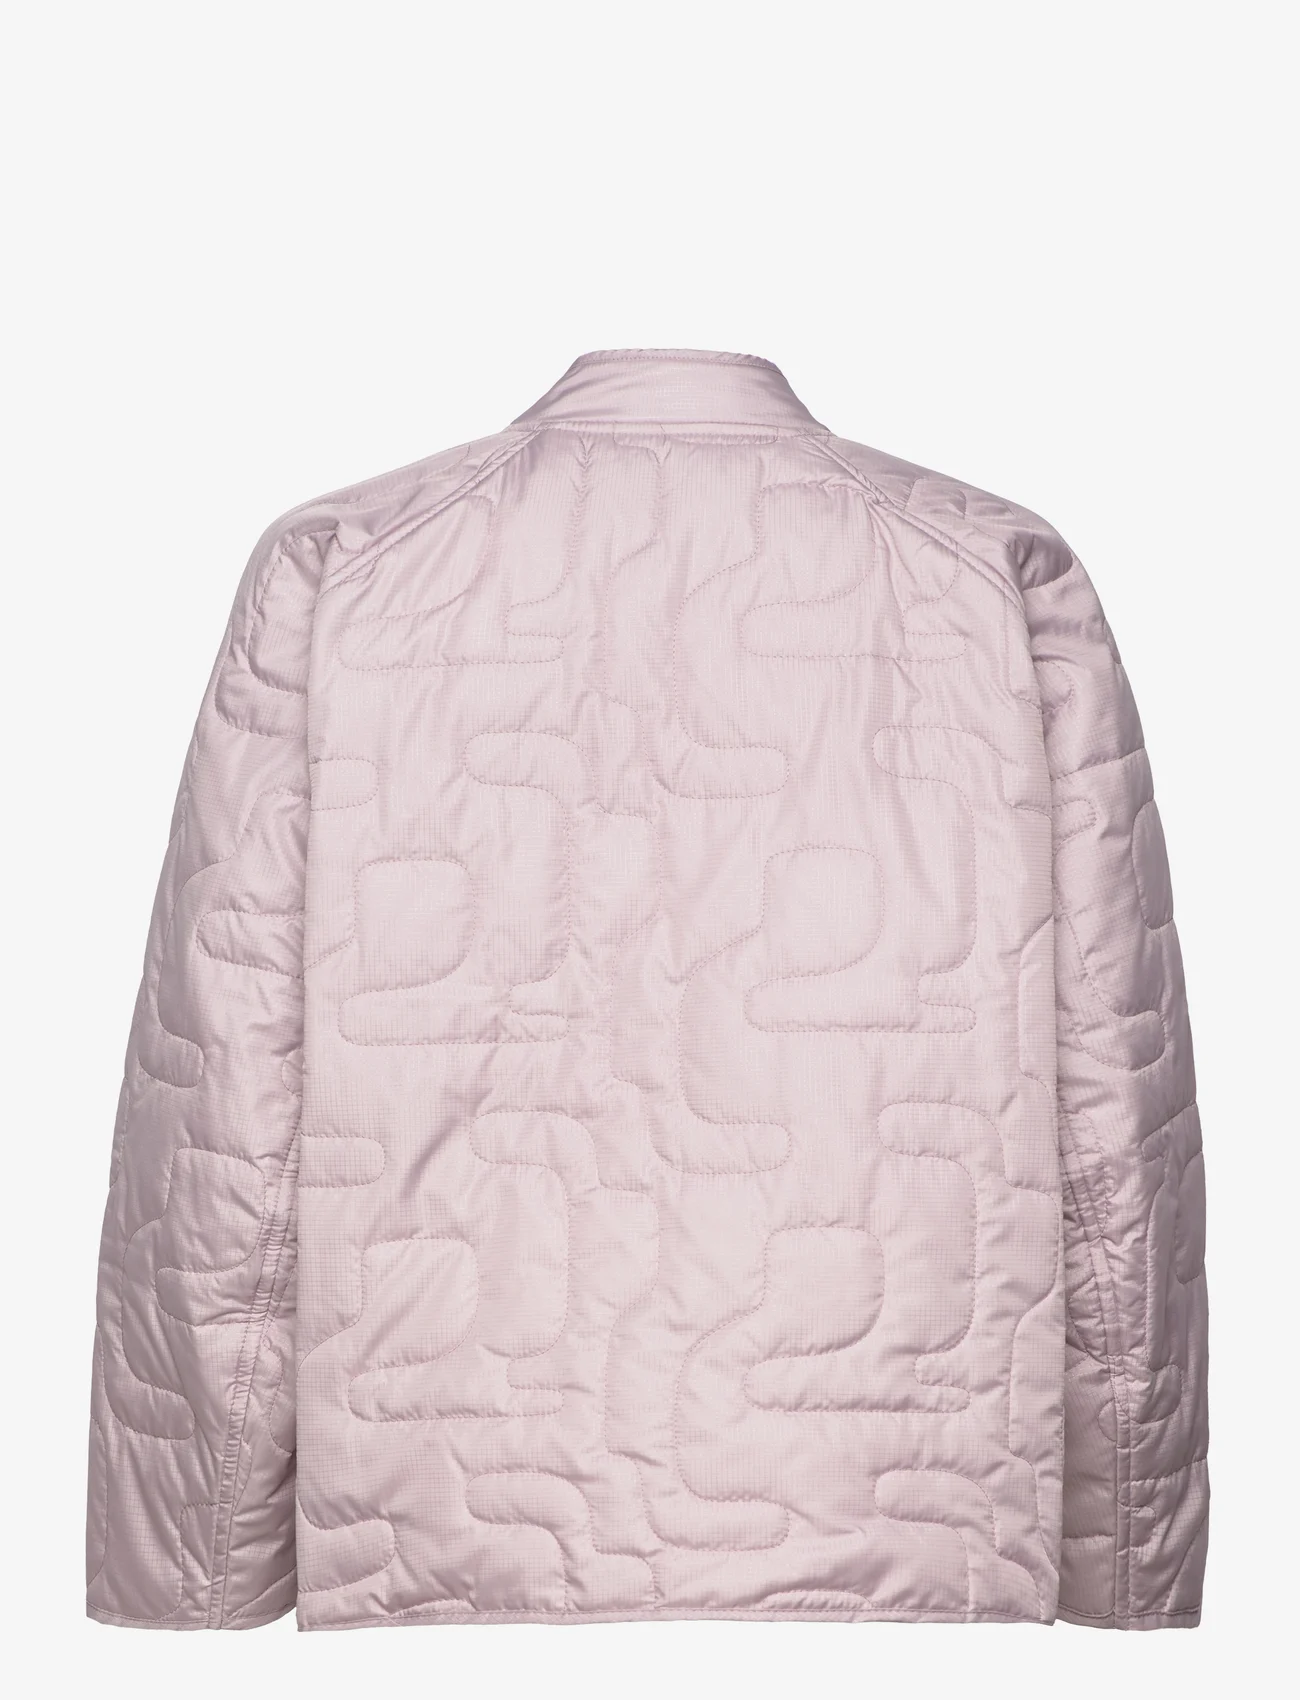 Rabens Saloner - Cophia - Deco quilt jacket - pikowana - mouse - 1